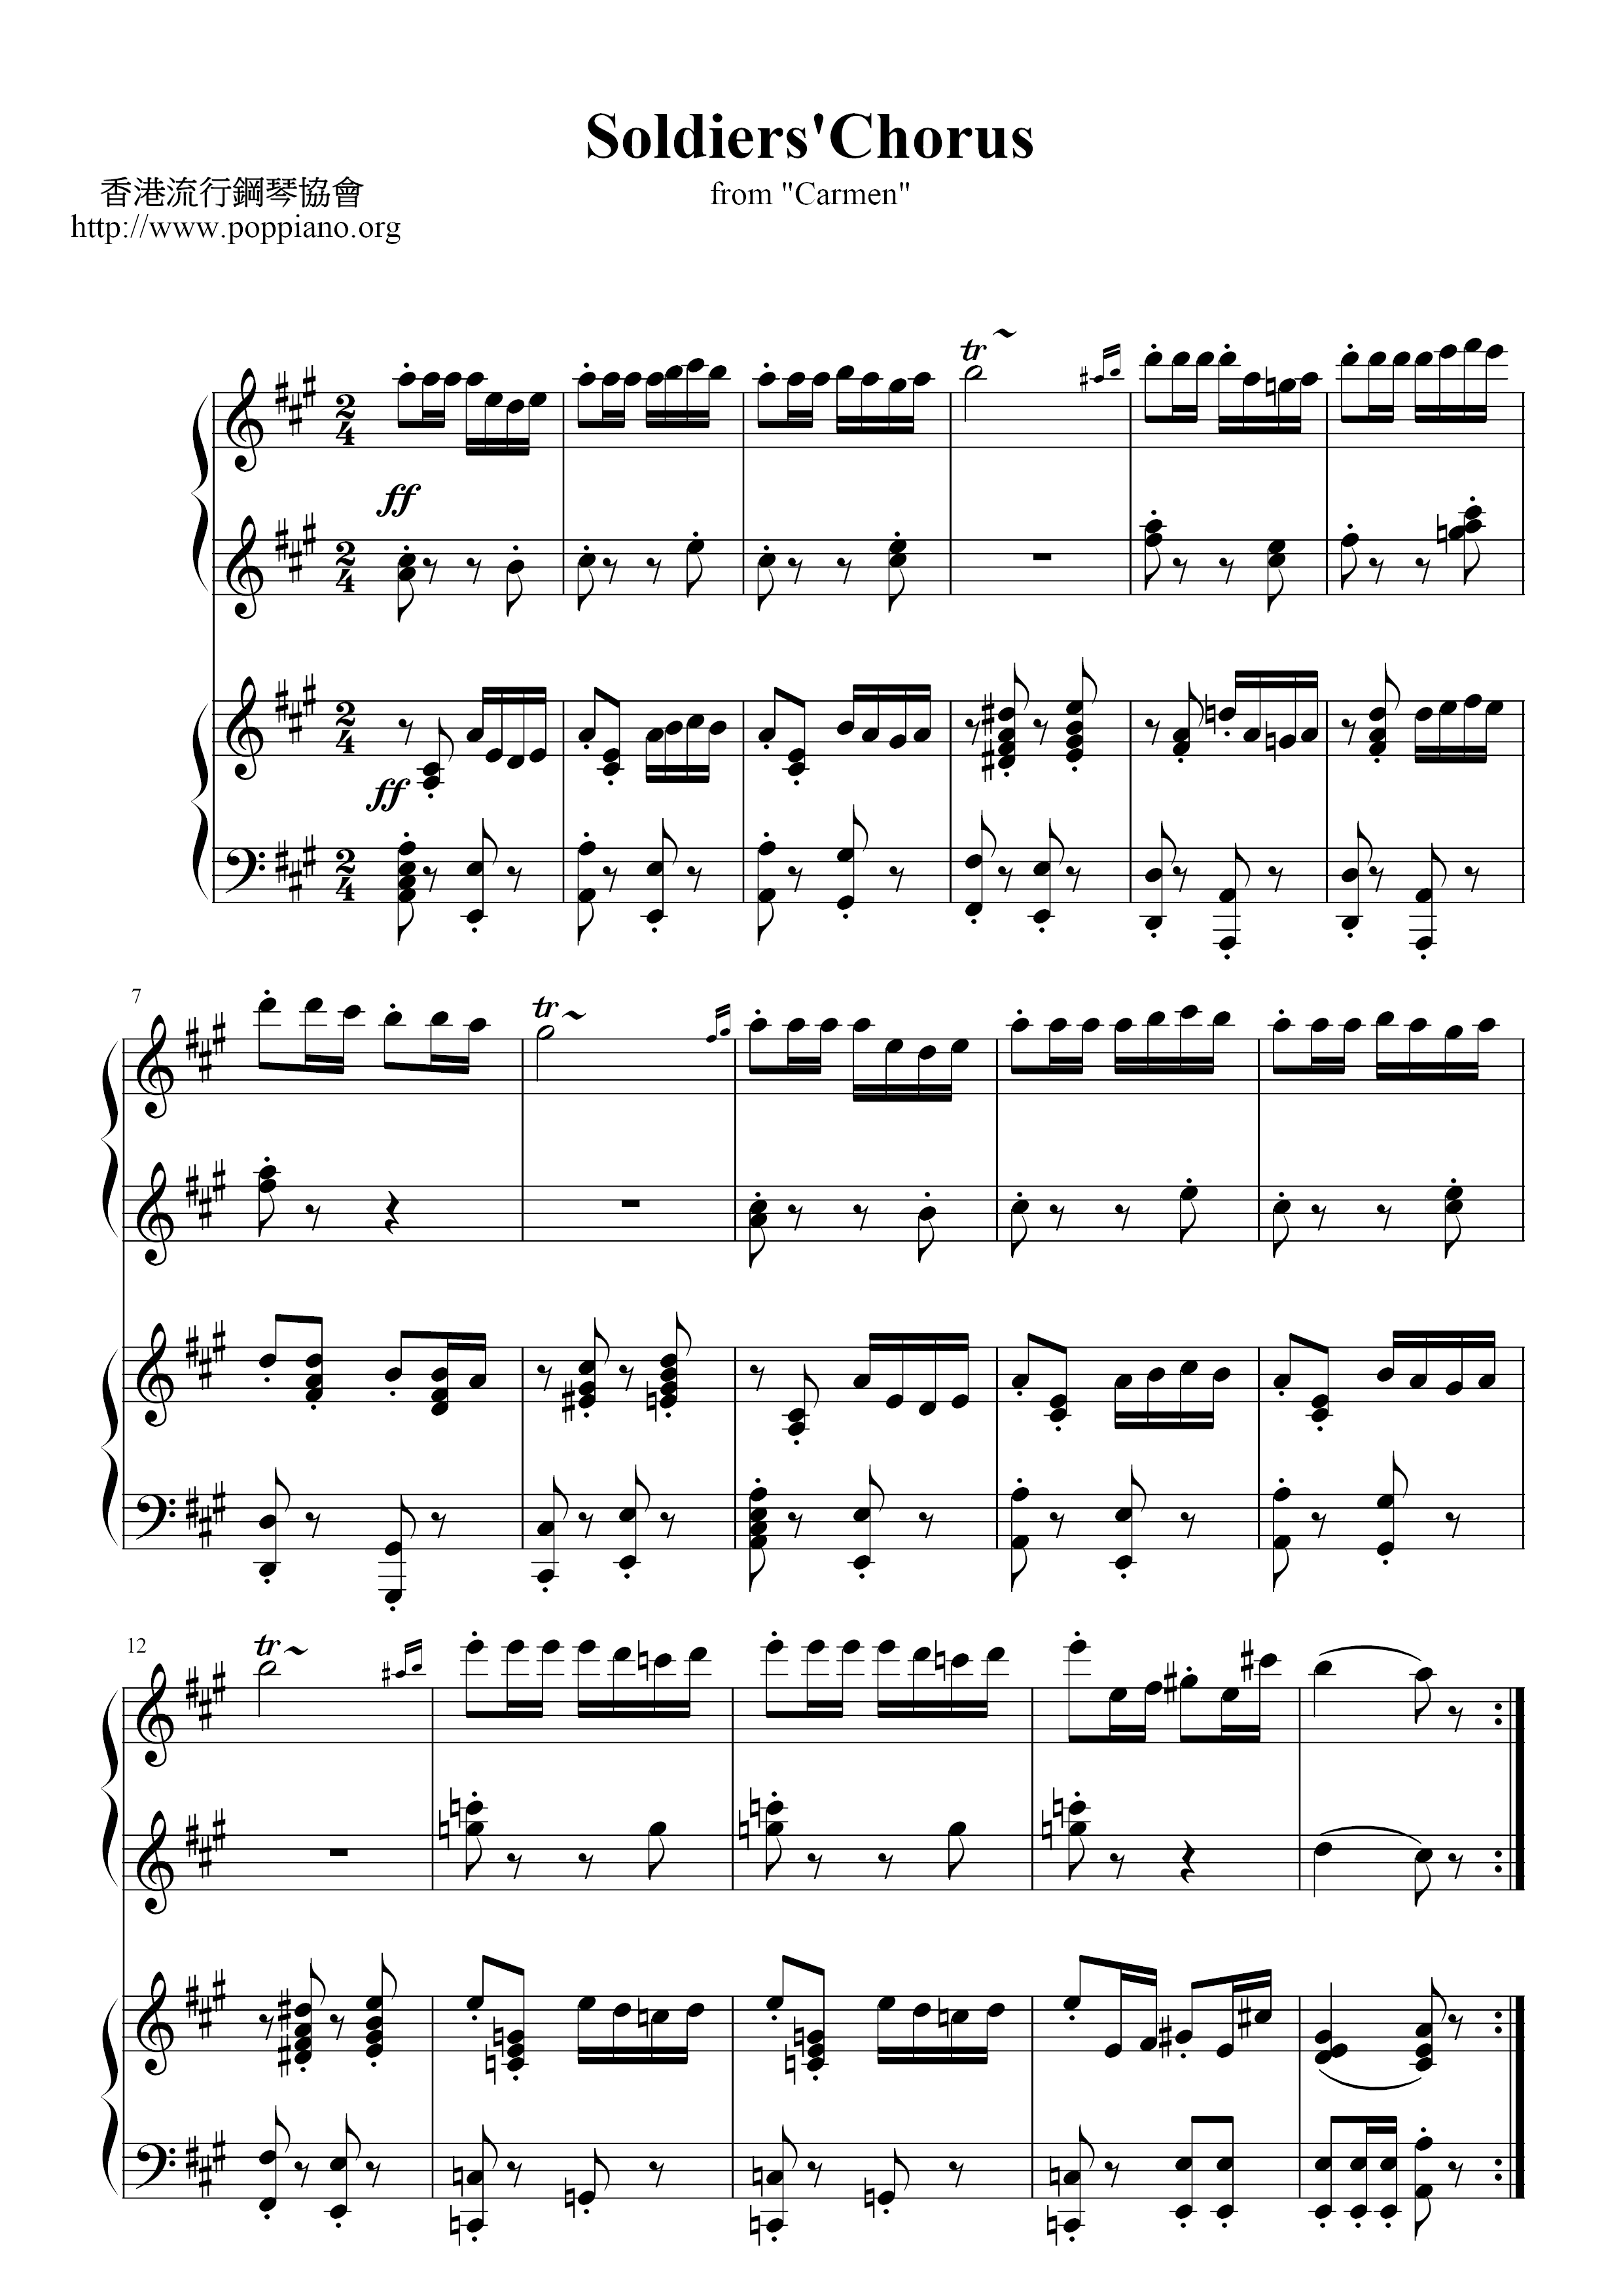 Carmen - Soldiers Chorus Score